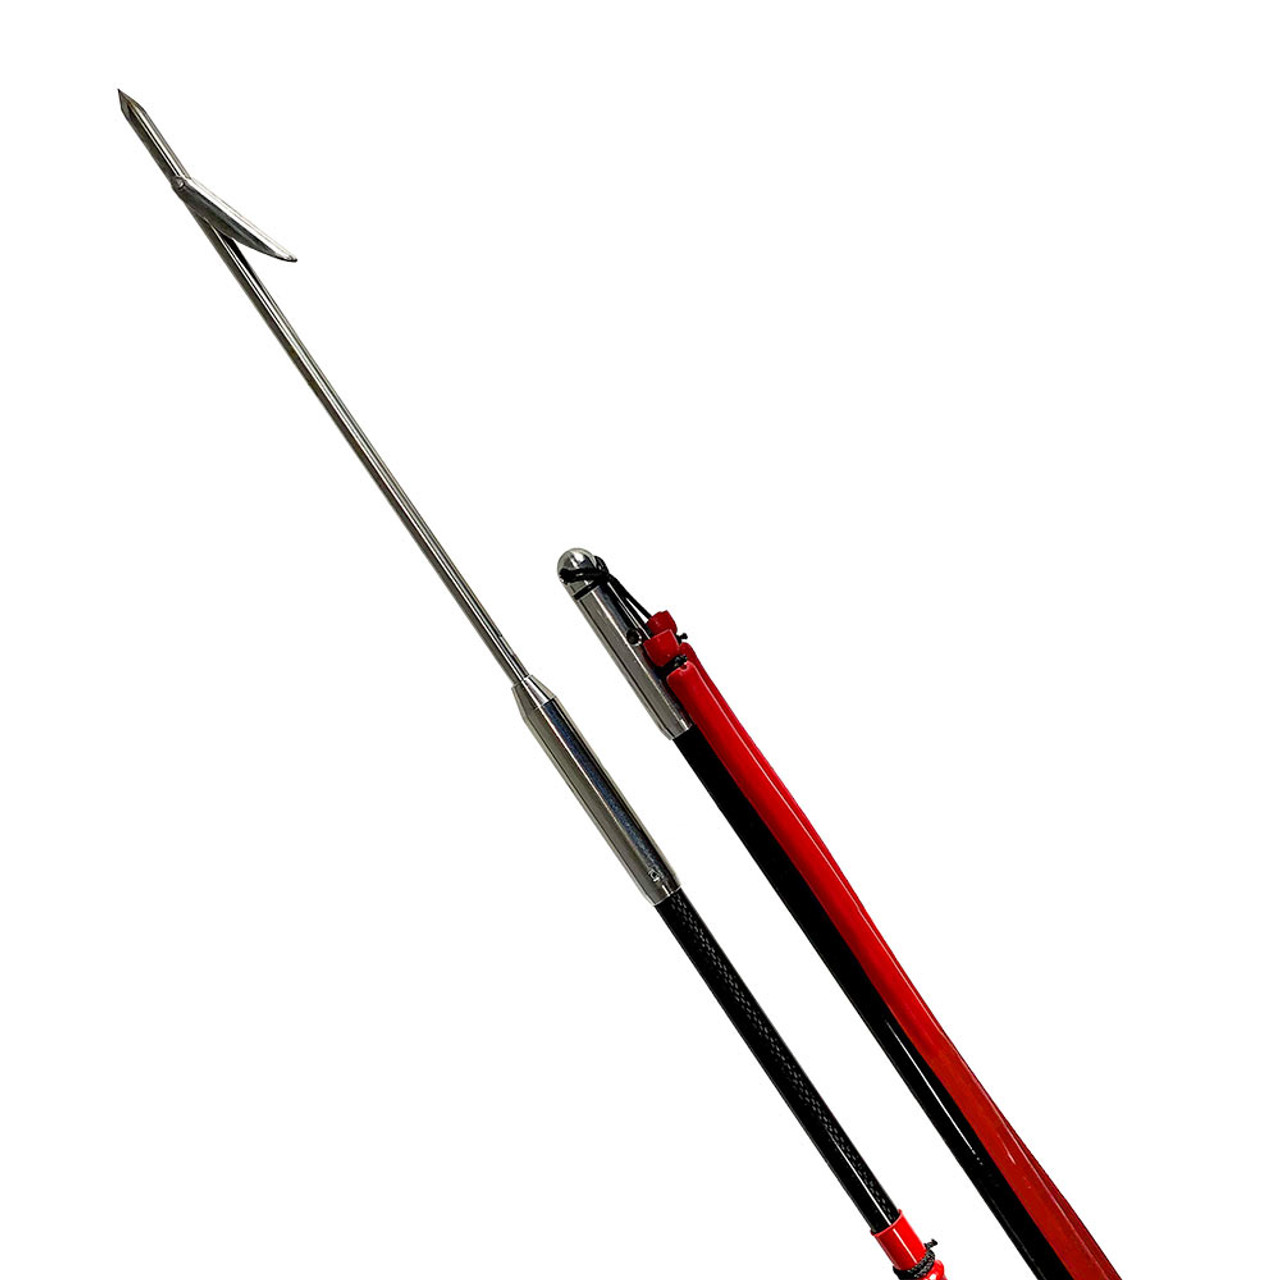 Scuba Choice Carbon Fiber 5' One Piece Spearfishing Pole Spear